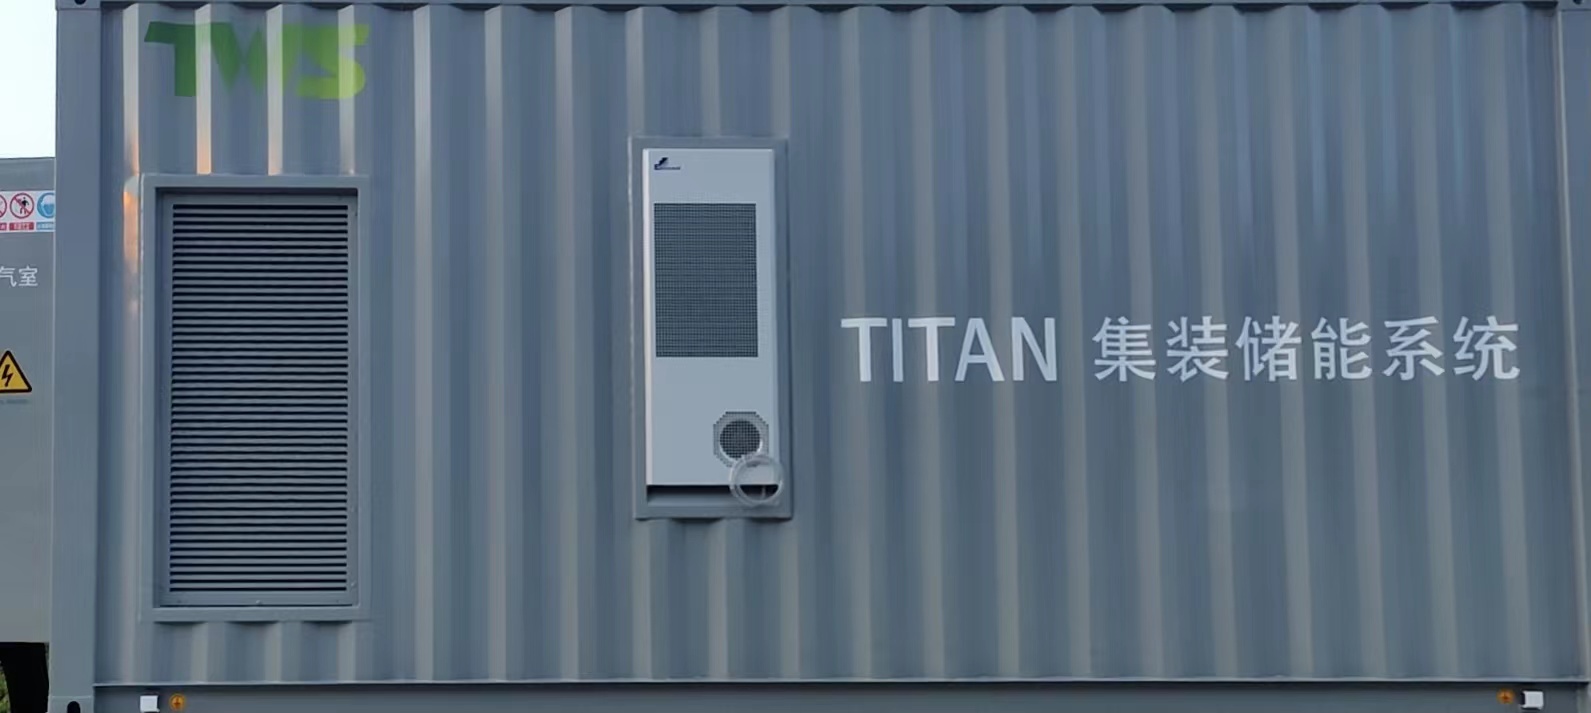 TITAN-1.jpg